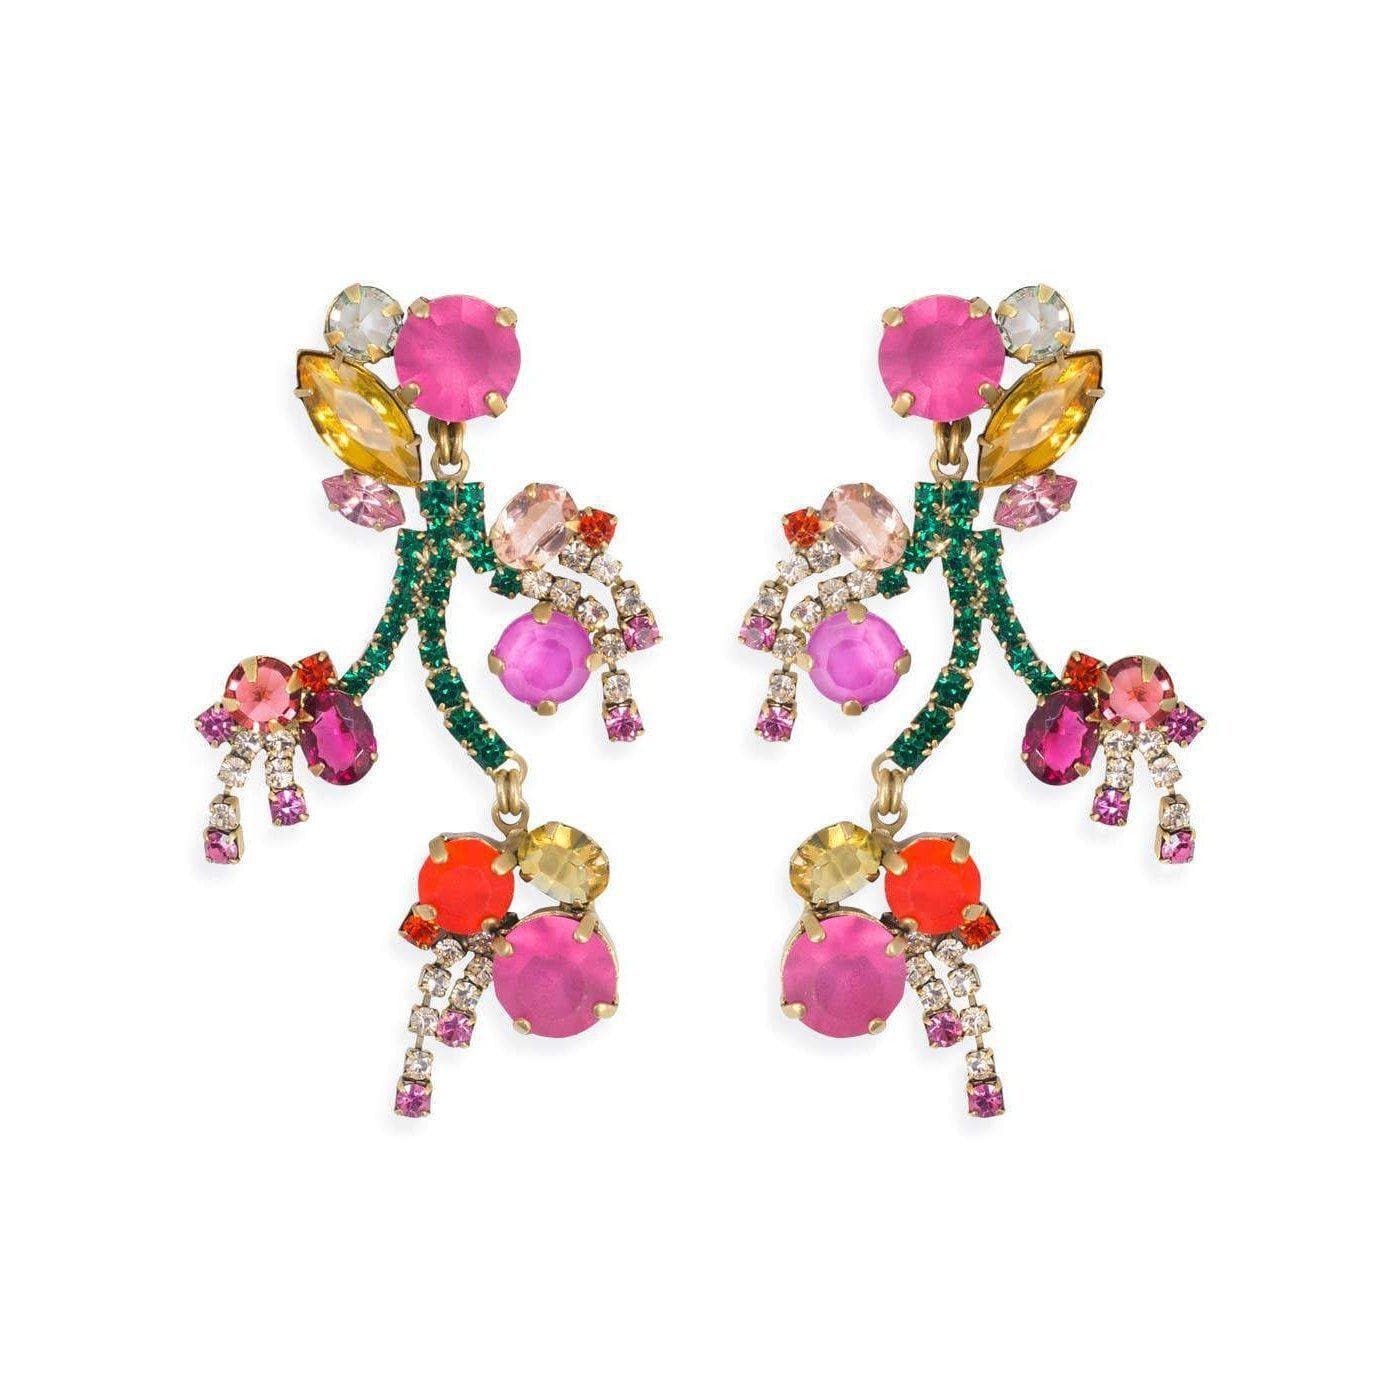 Begonia Floral Statement Earrings - Loren Hope